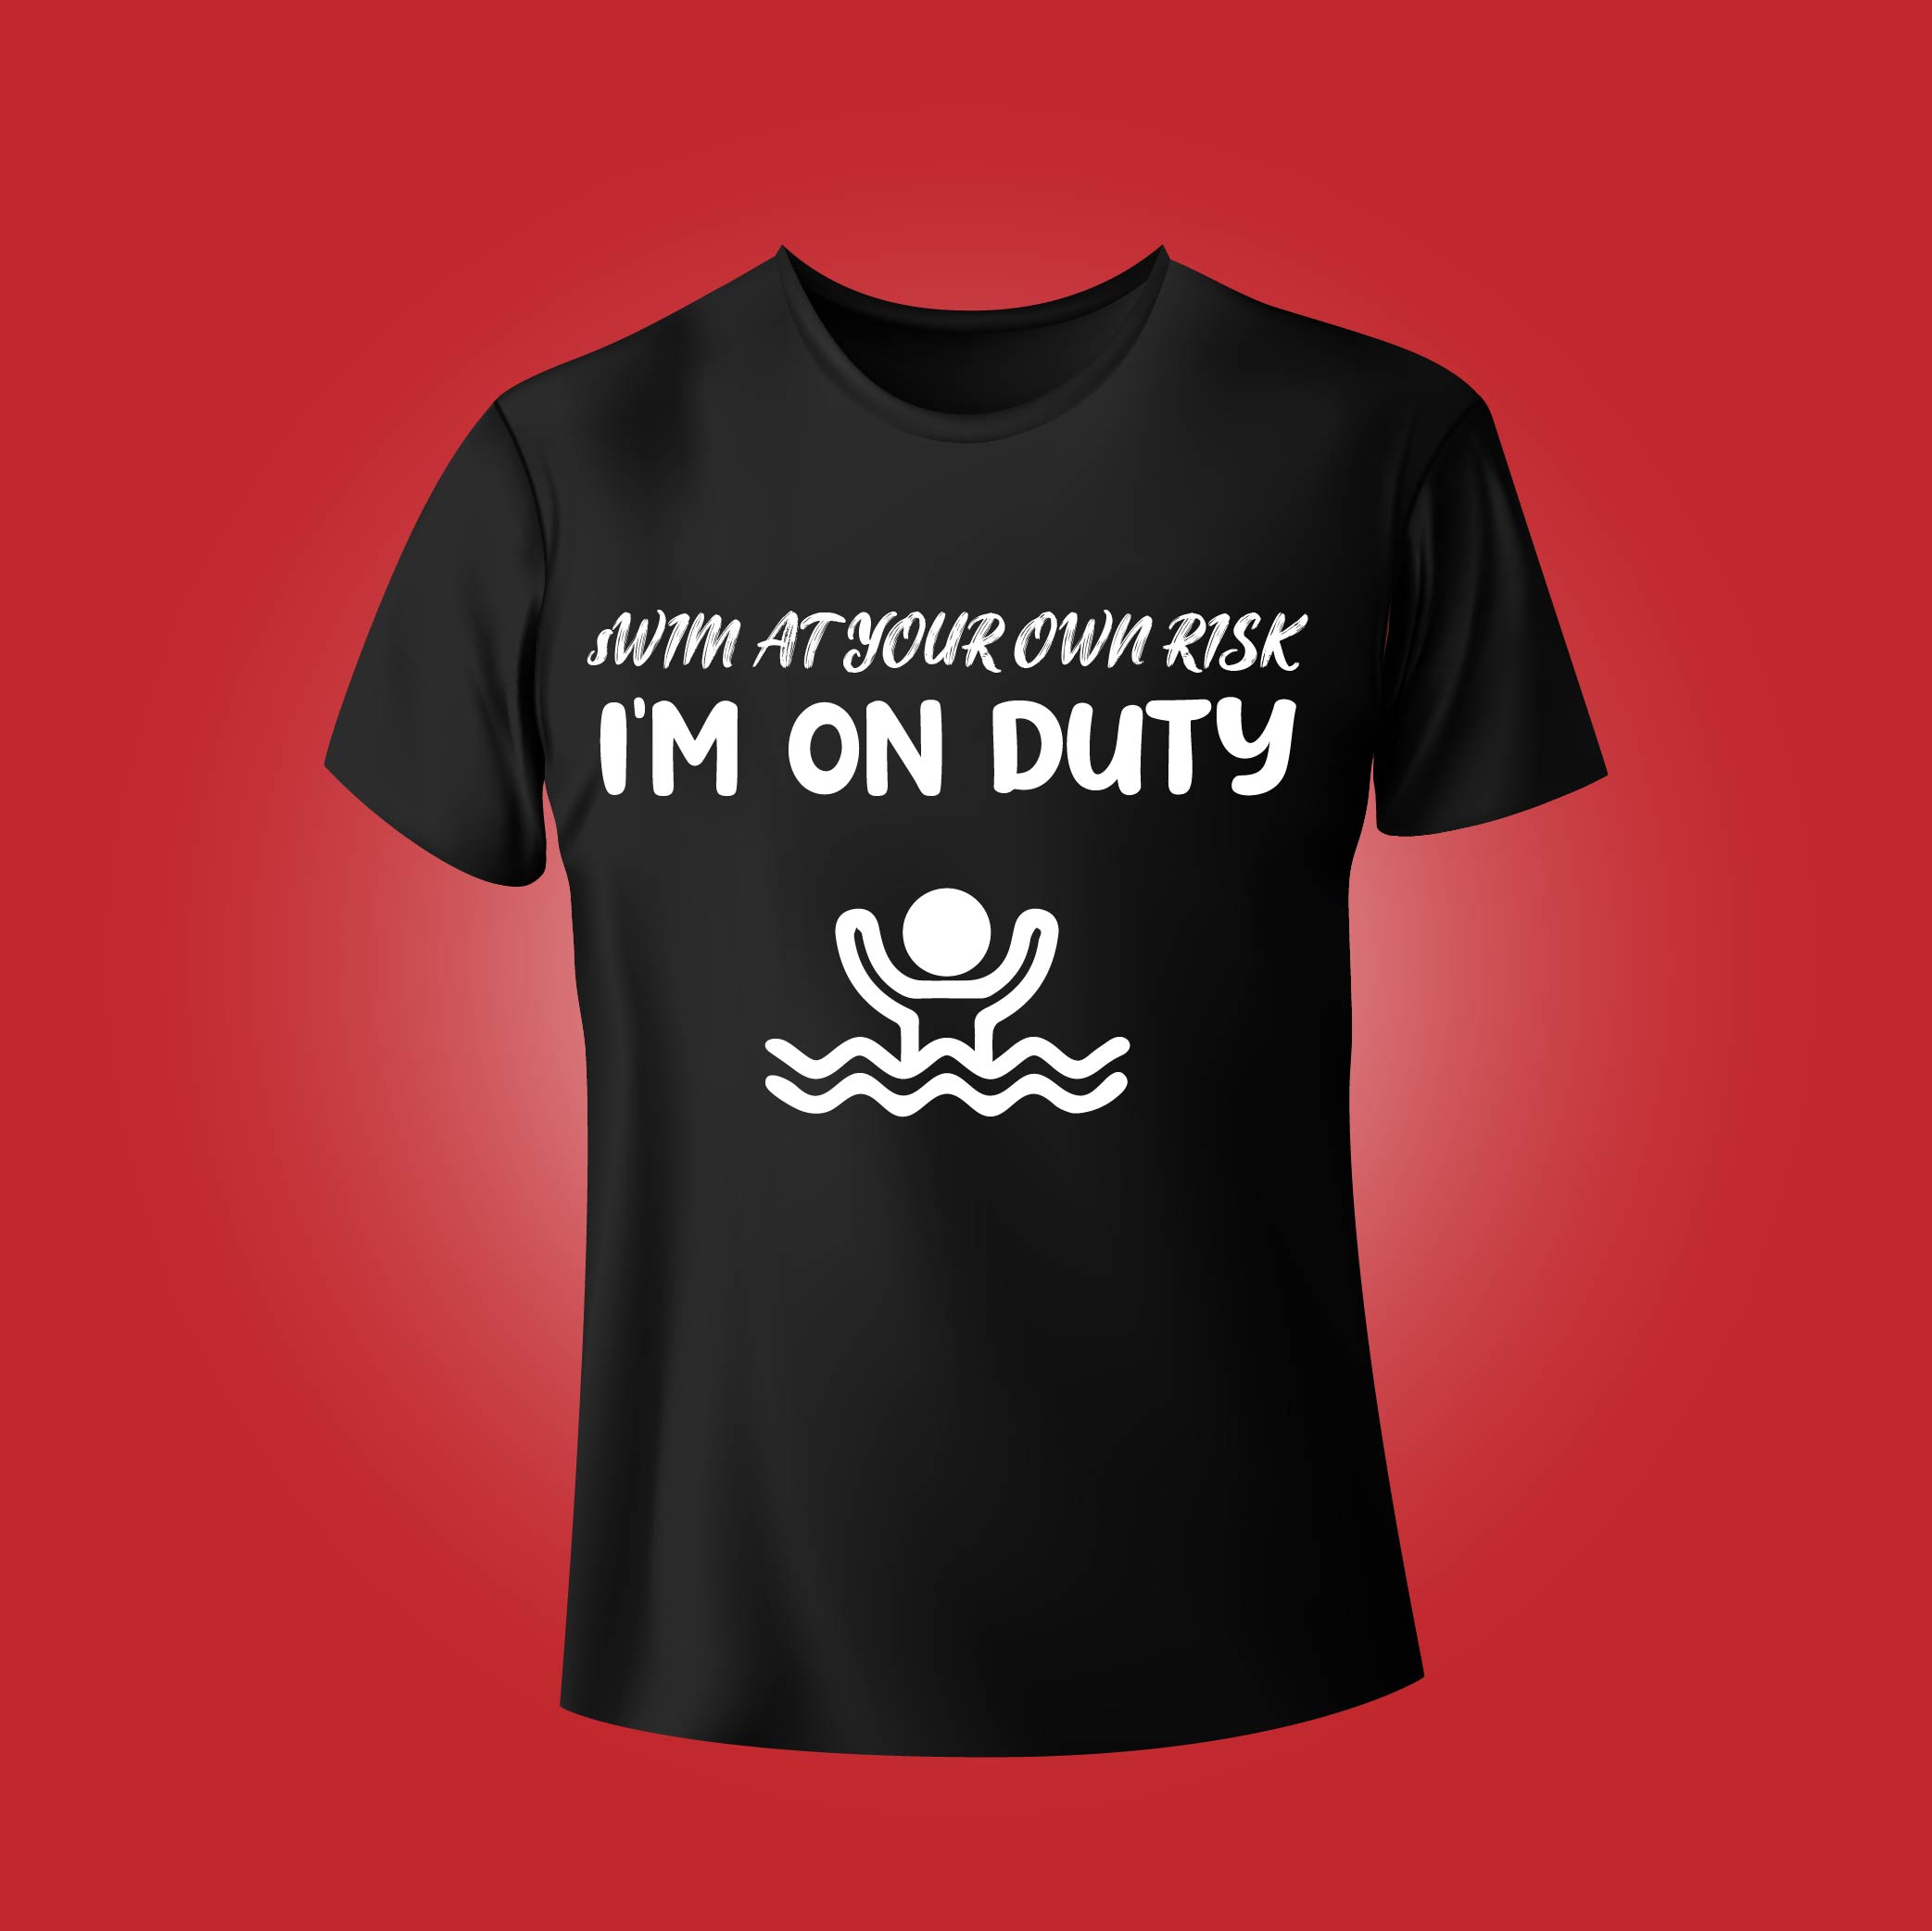 Black t - shirt that says i'm on duty.